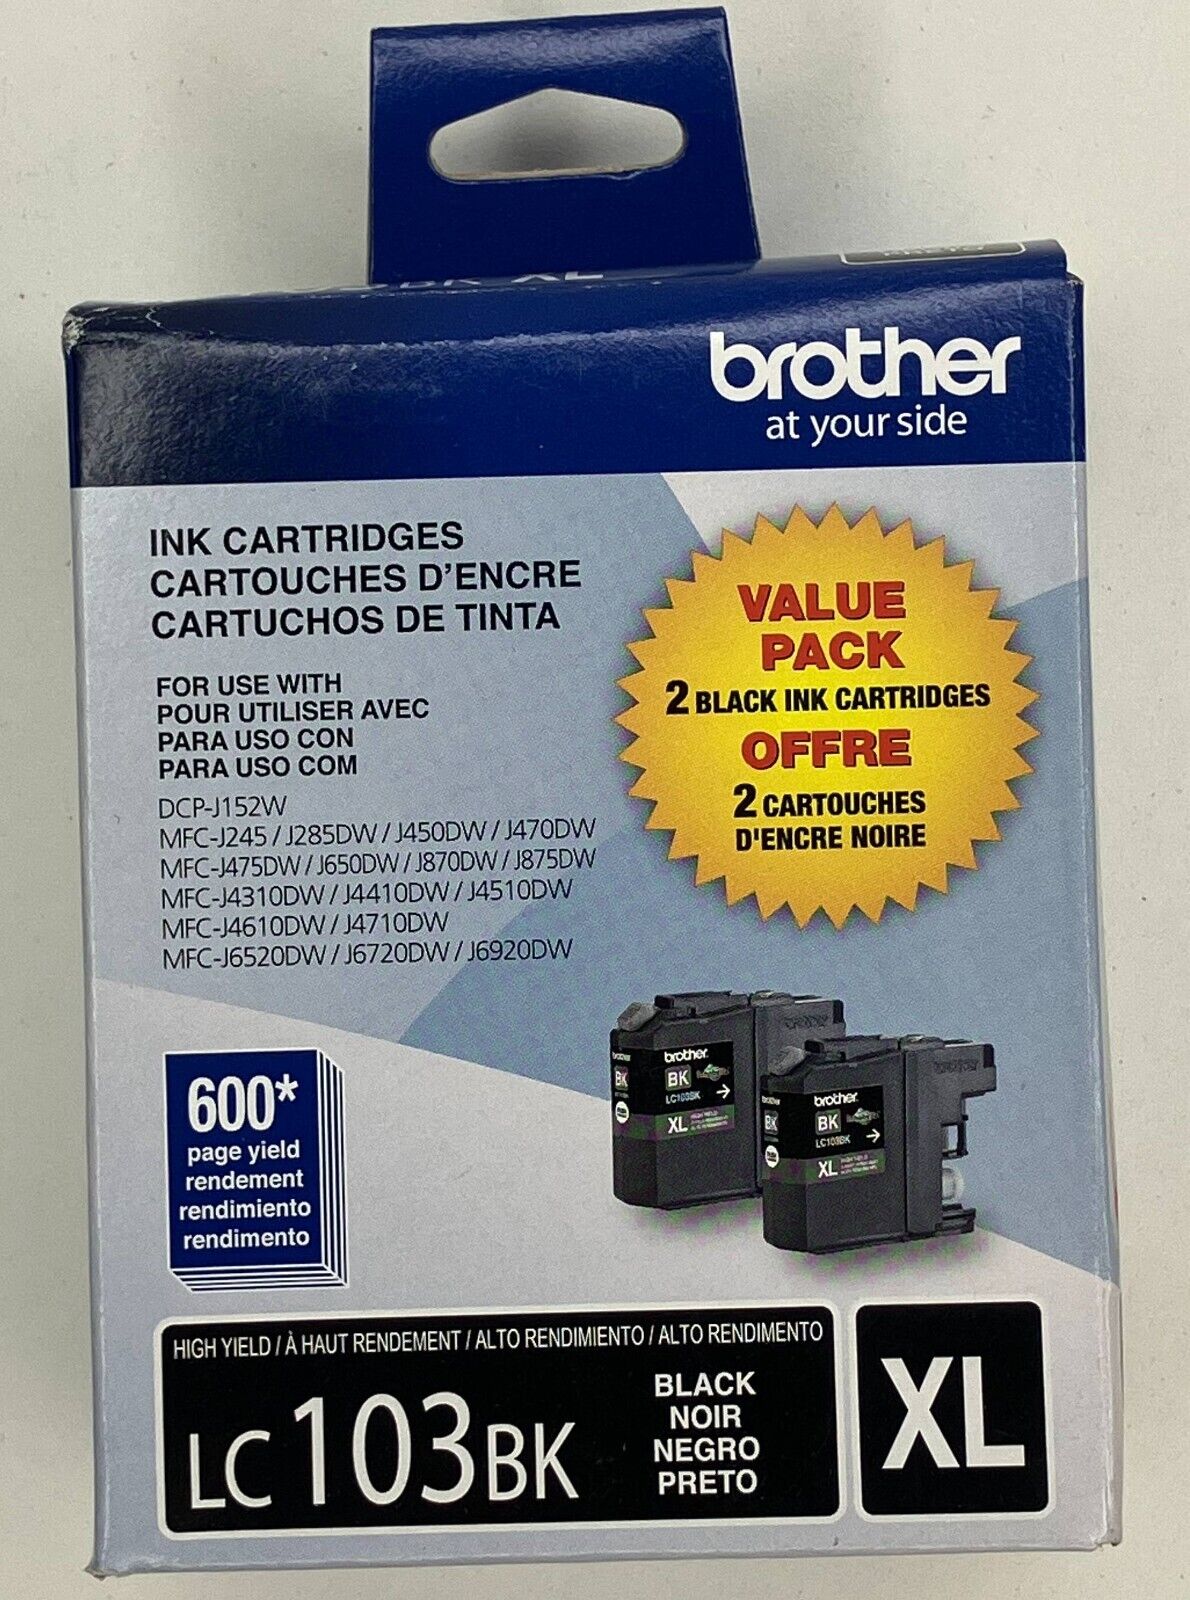 Genuine Brother LC103BK XL Black Pack Ink Cartridges EXP 04/2025 2 Pack SEALED